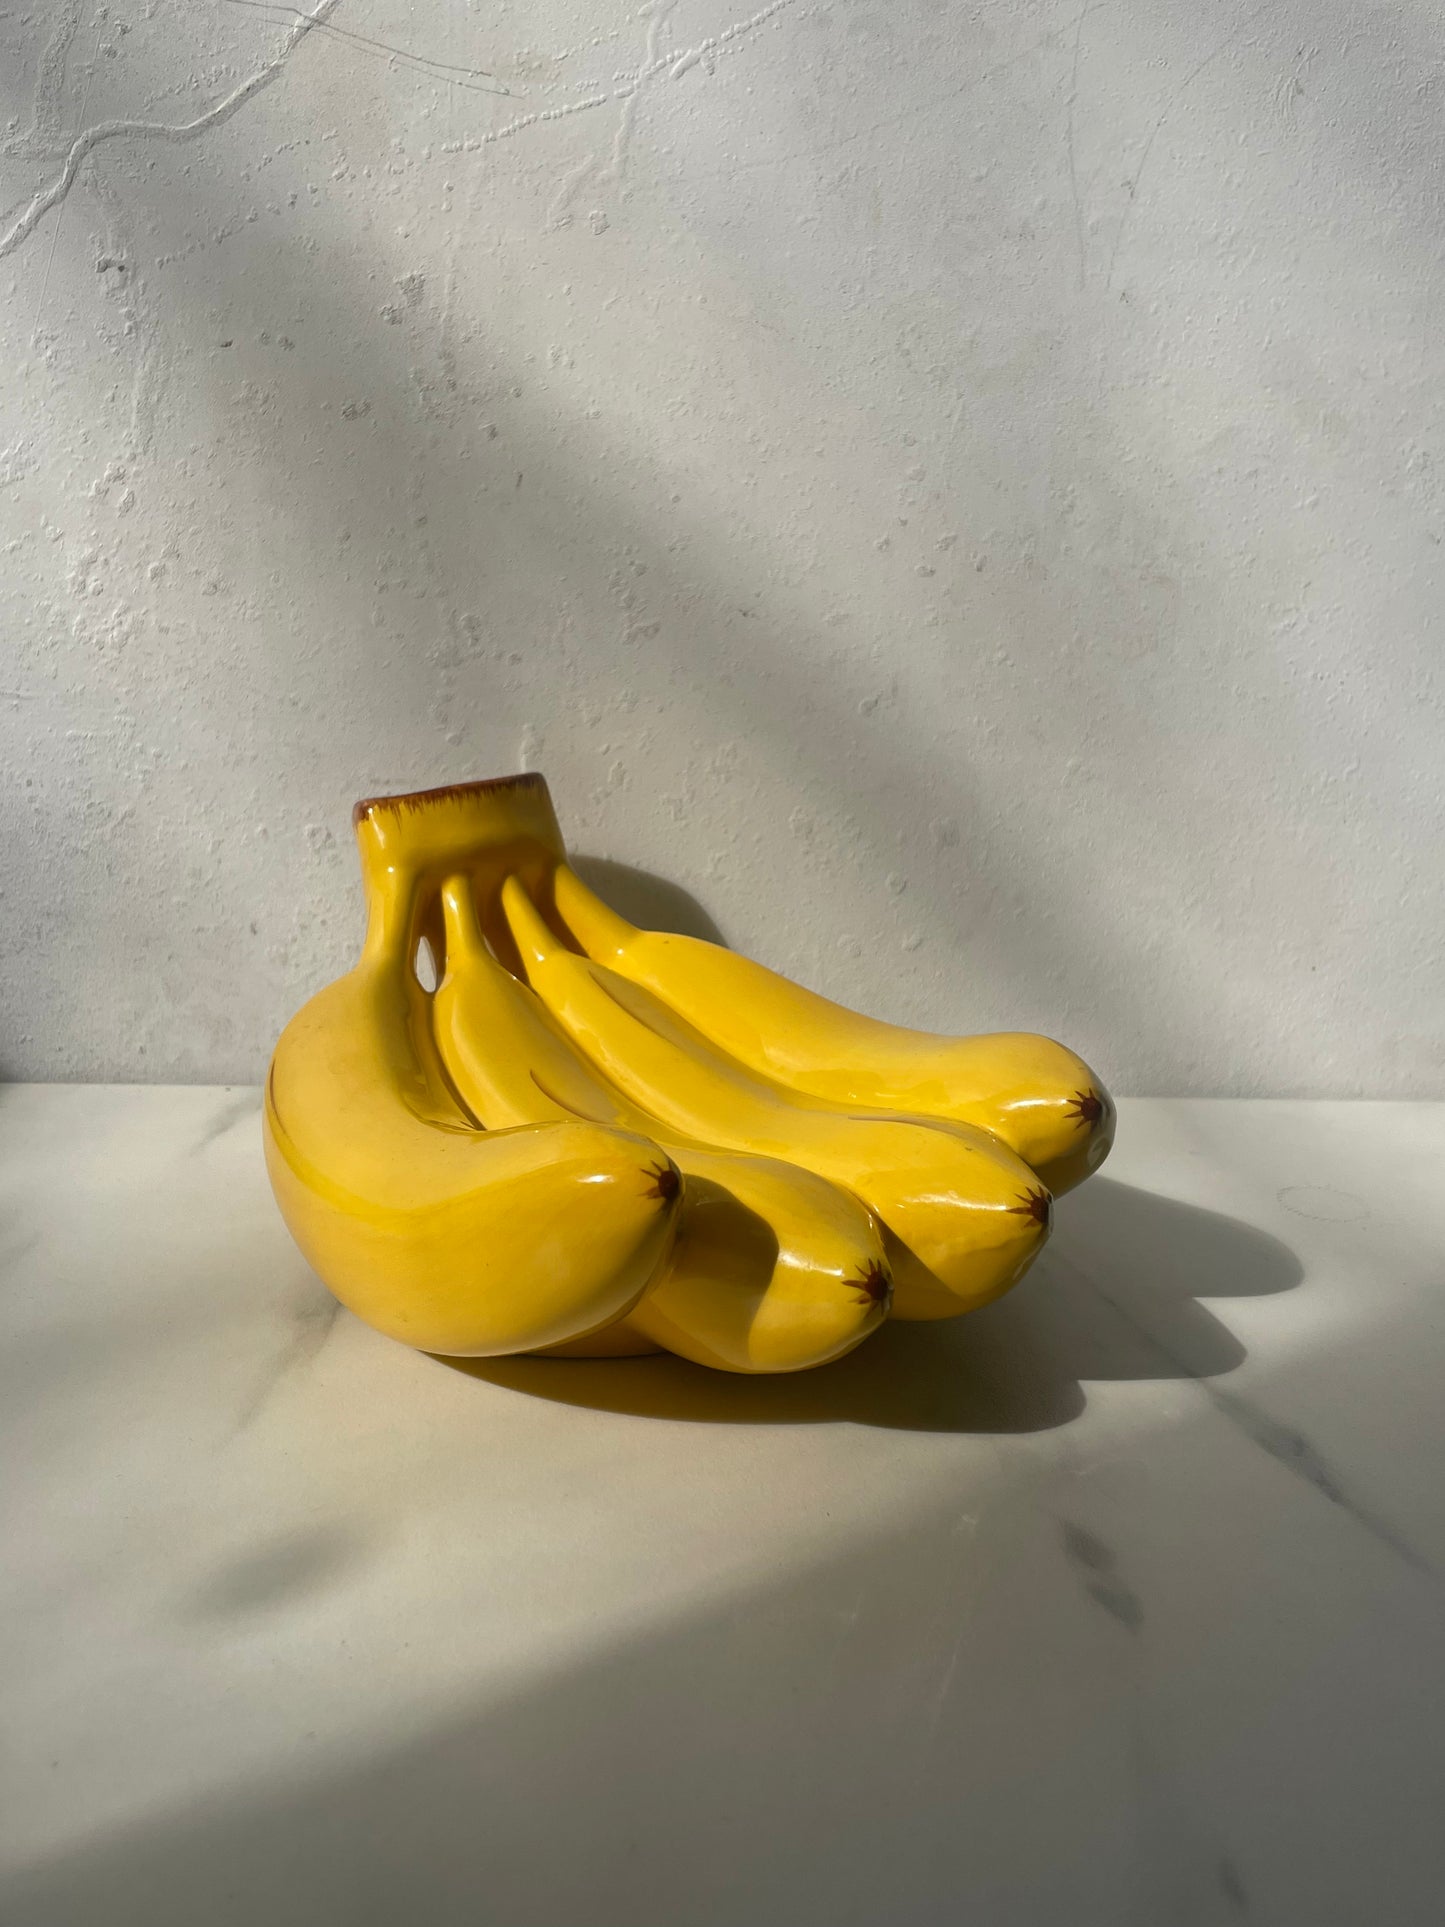 Ceramic Banana Bunch